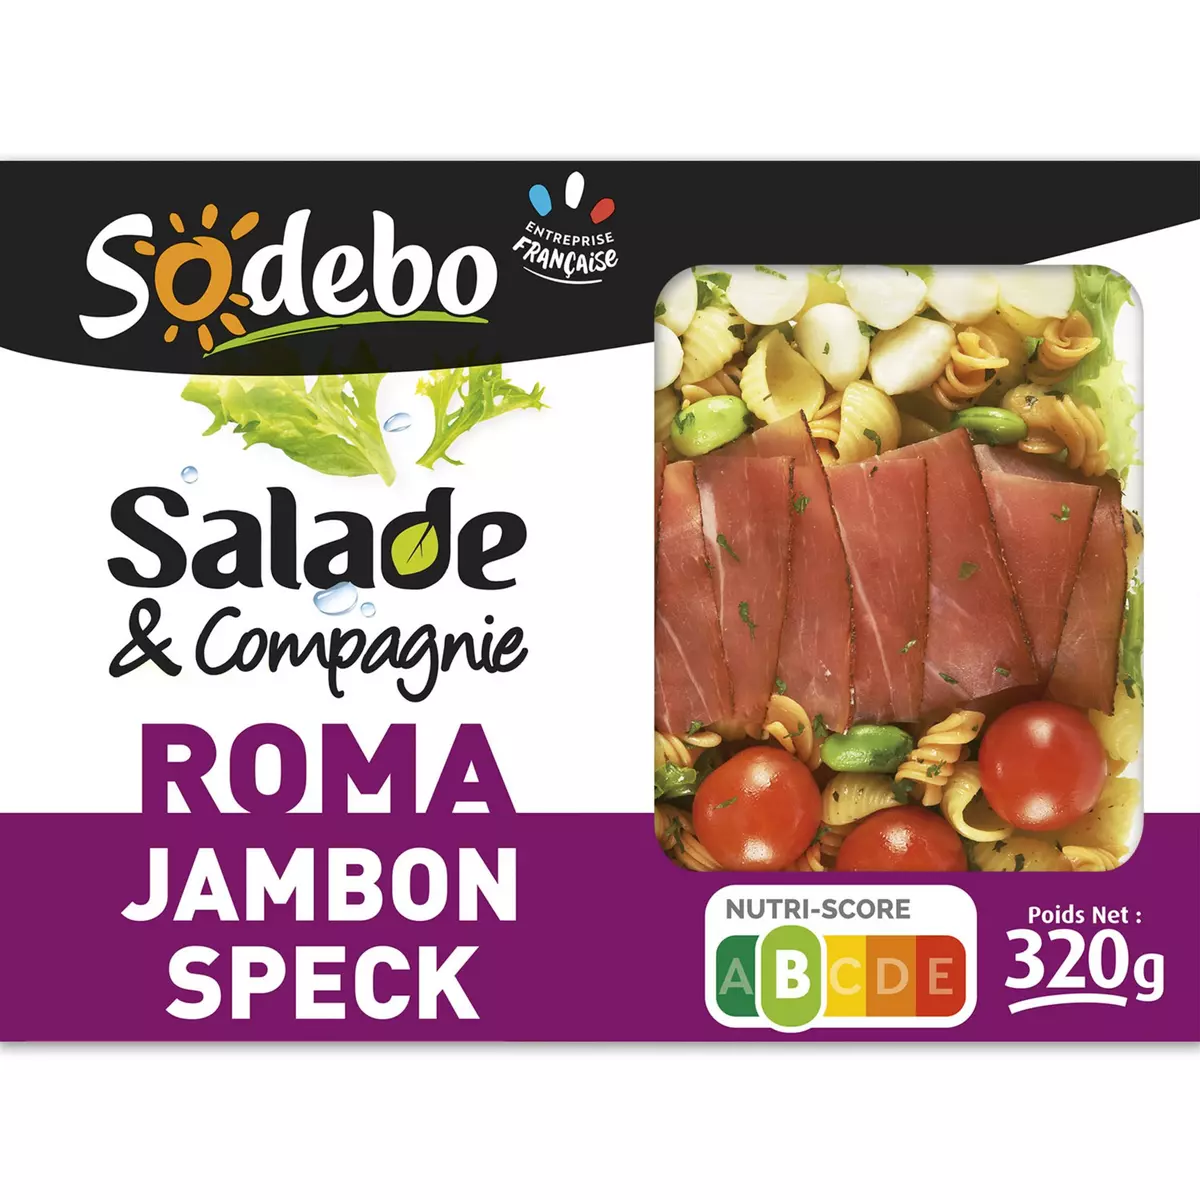 SODEBO Salade & compagnie roma jambon speck crudités pâtes 1 portion 320g